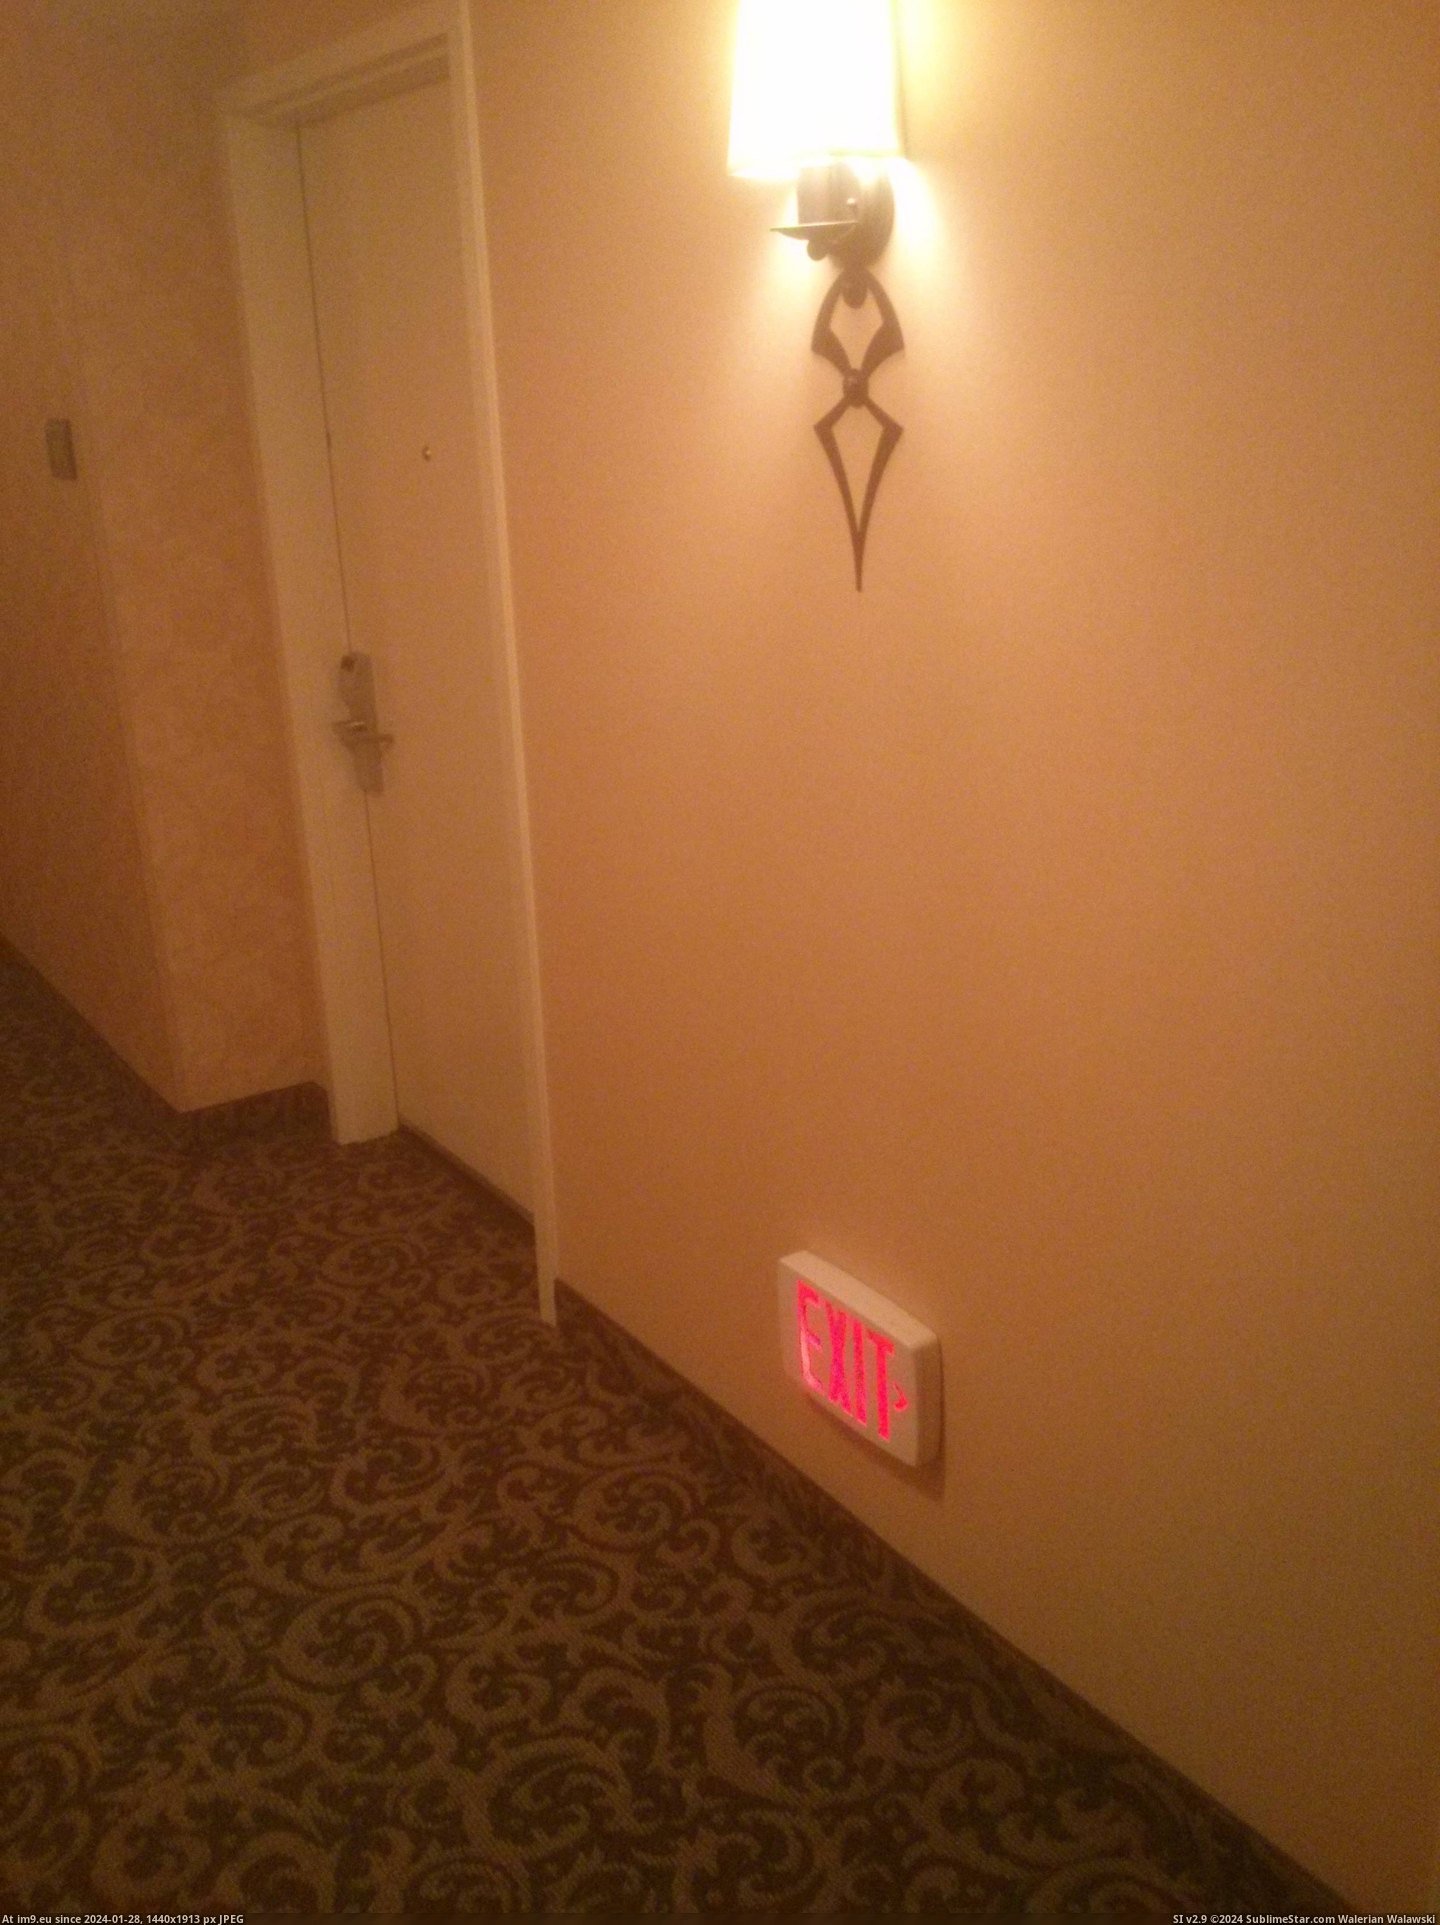 #Hotel #Hallway #Exit #Floor [Mildlyinteresting] Found an exit sign near the floor of a hotel hallway Pic. (Изображение из альбом My r/MILDLYINTERESTING favs))